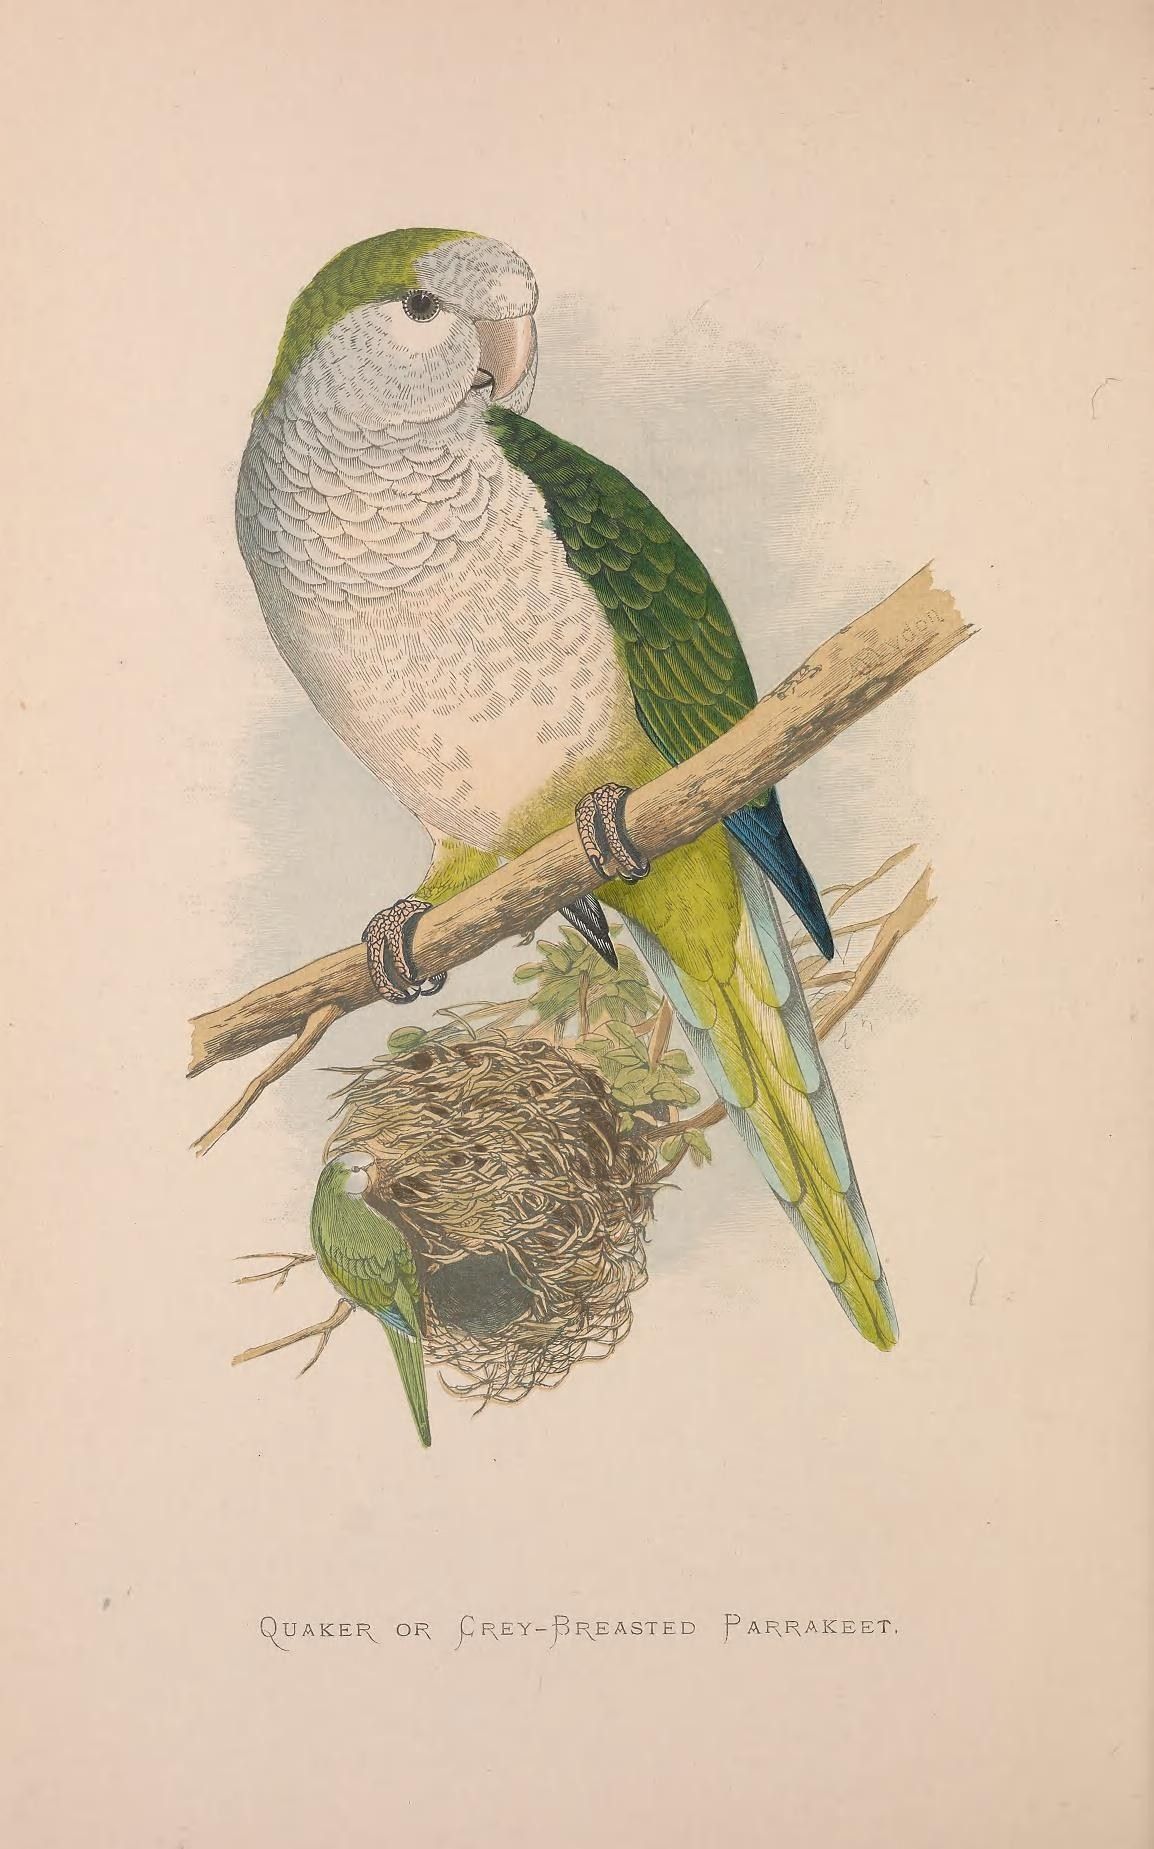 Vintage illustration of Myiopsitta monachus, labeled "quaker or grey-breasted parrakeet".